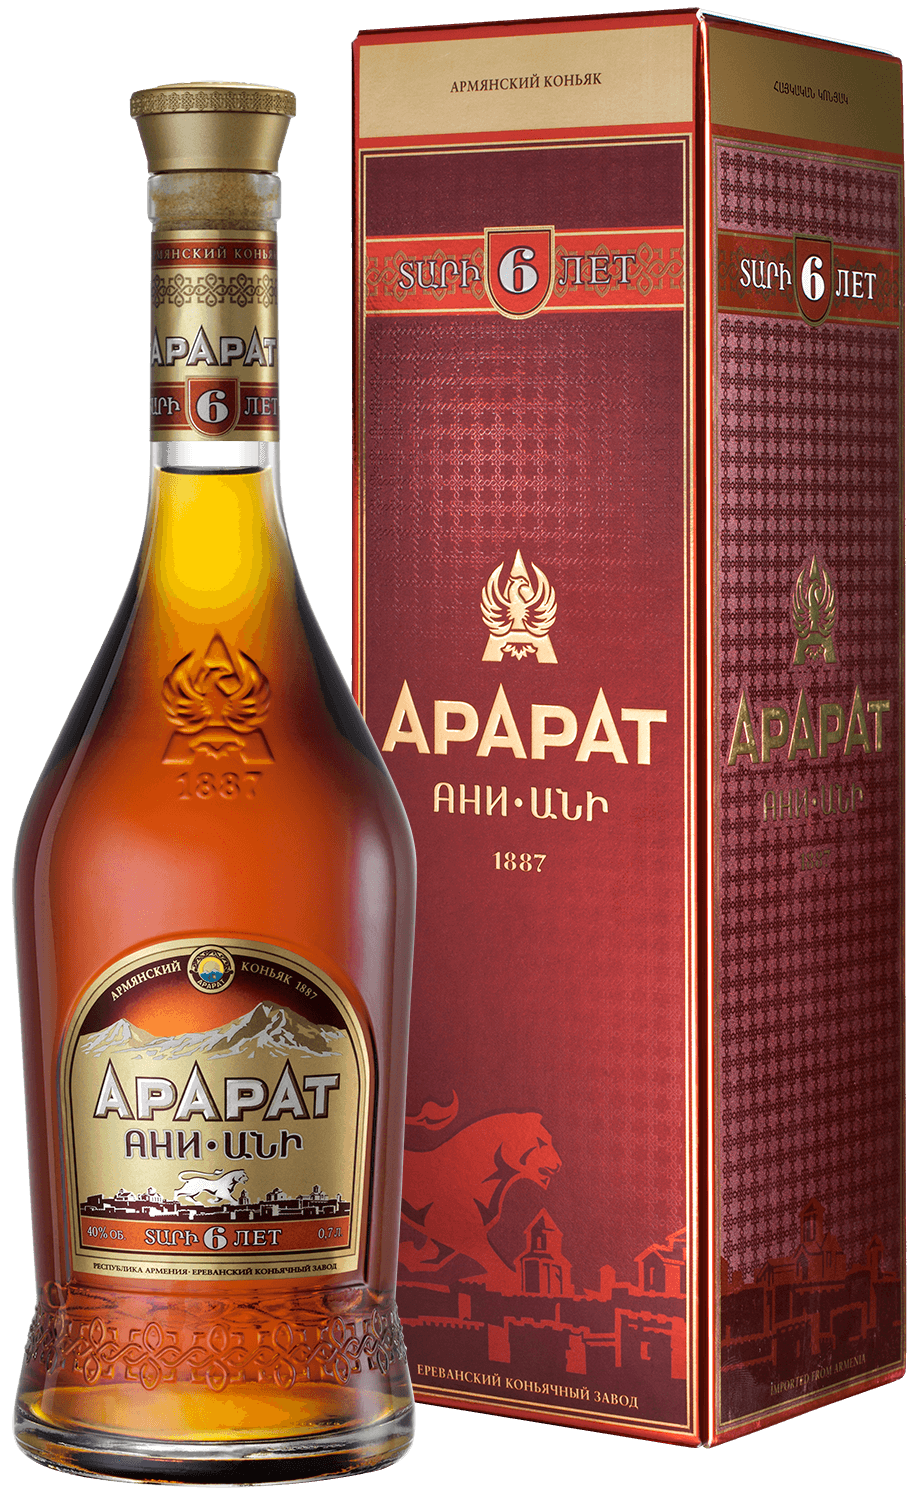 ararat nairi armenian brandy 20 y o gift box ARARAT Ani Armenian Brandy 6 y.o. (gift box)